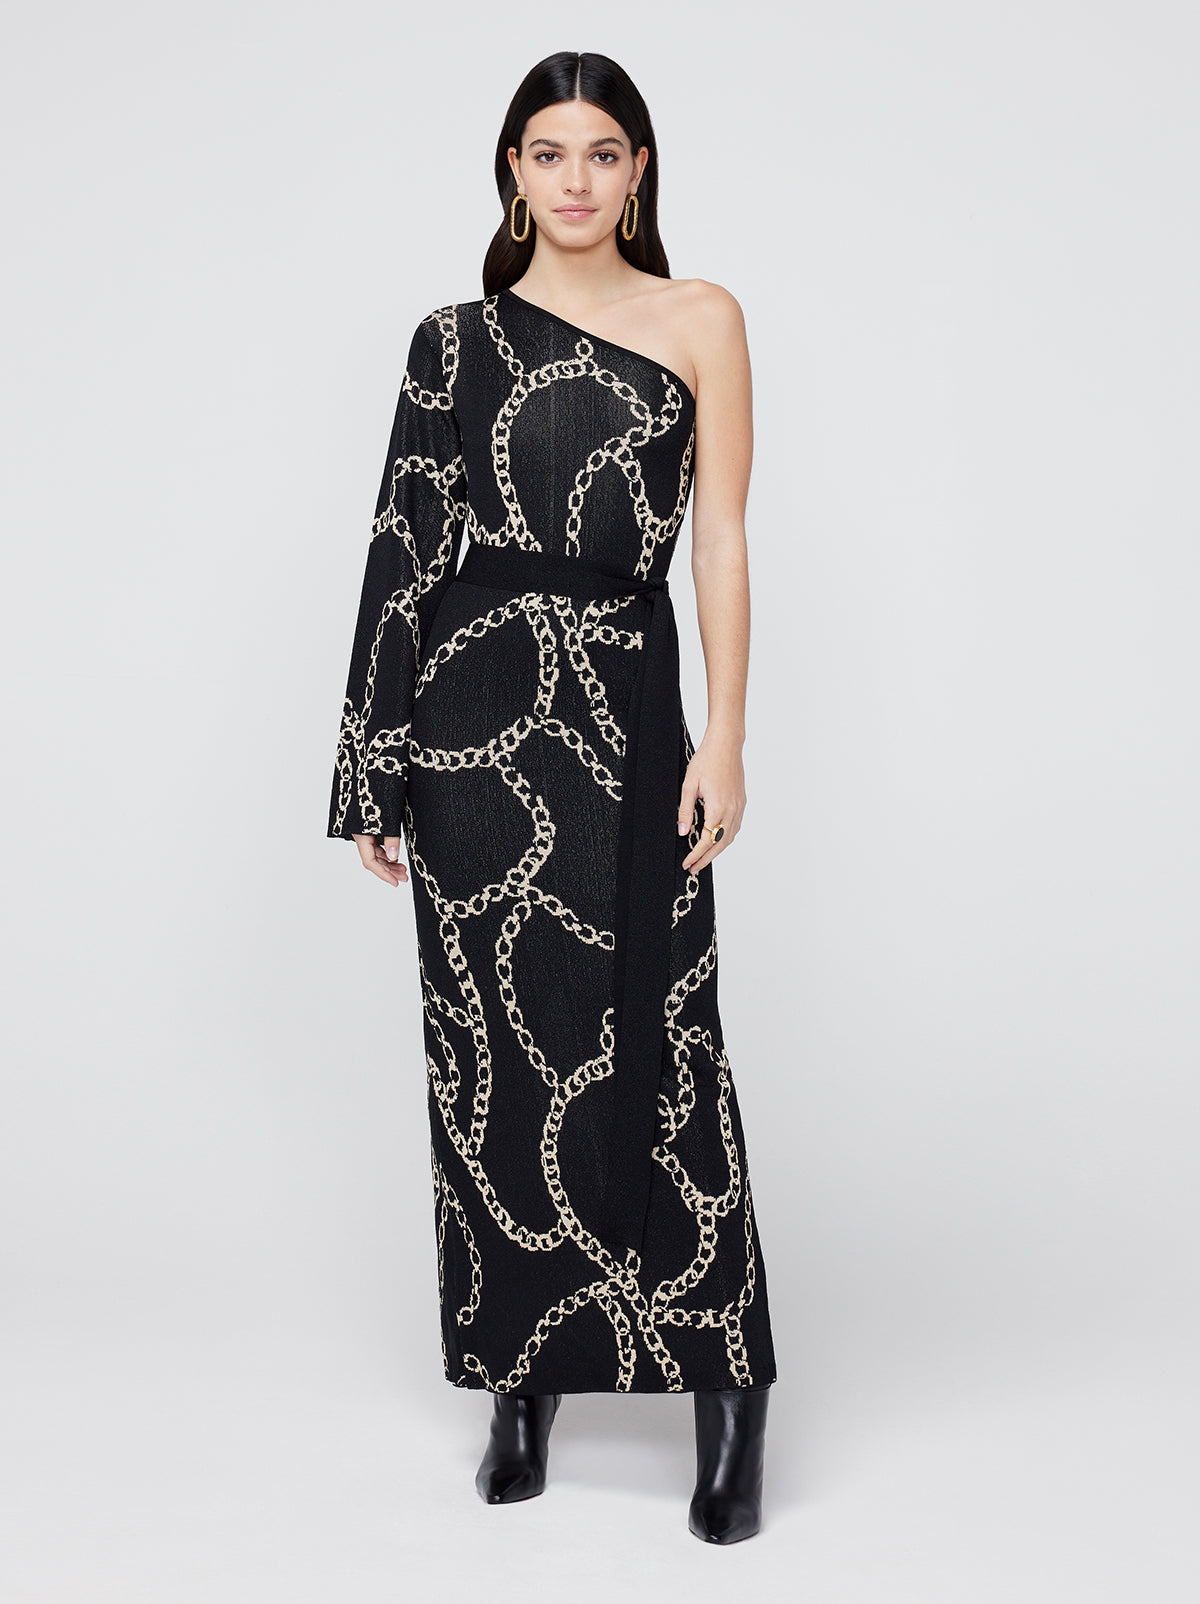 Esme Black Chain Lurex Knit One Shoulder Dress By KITRI Studio